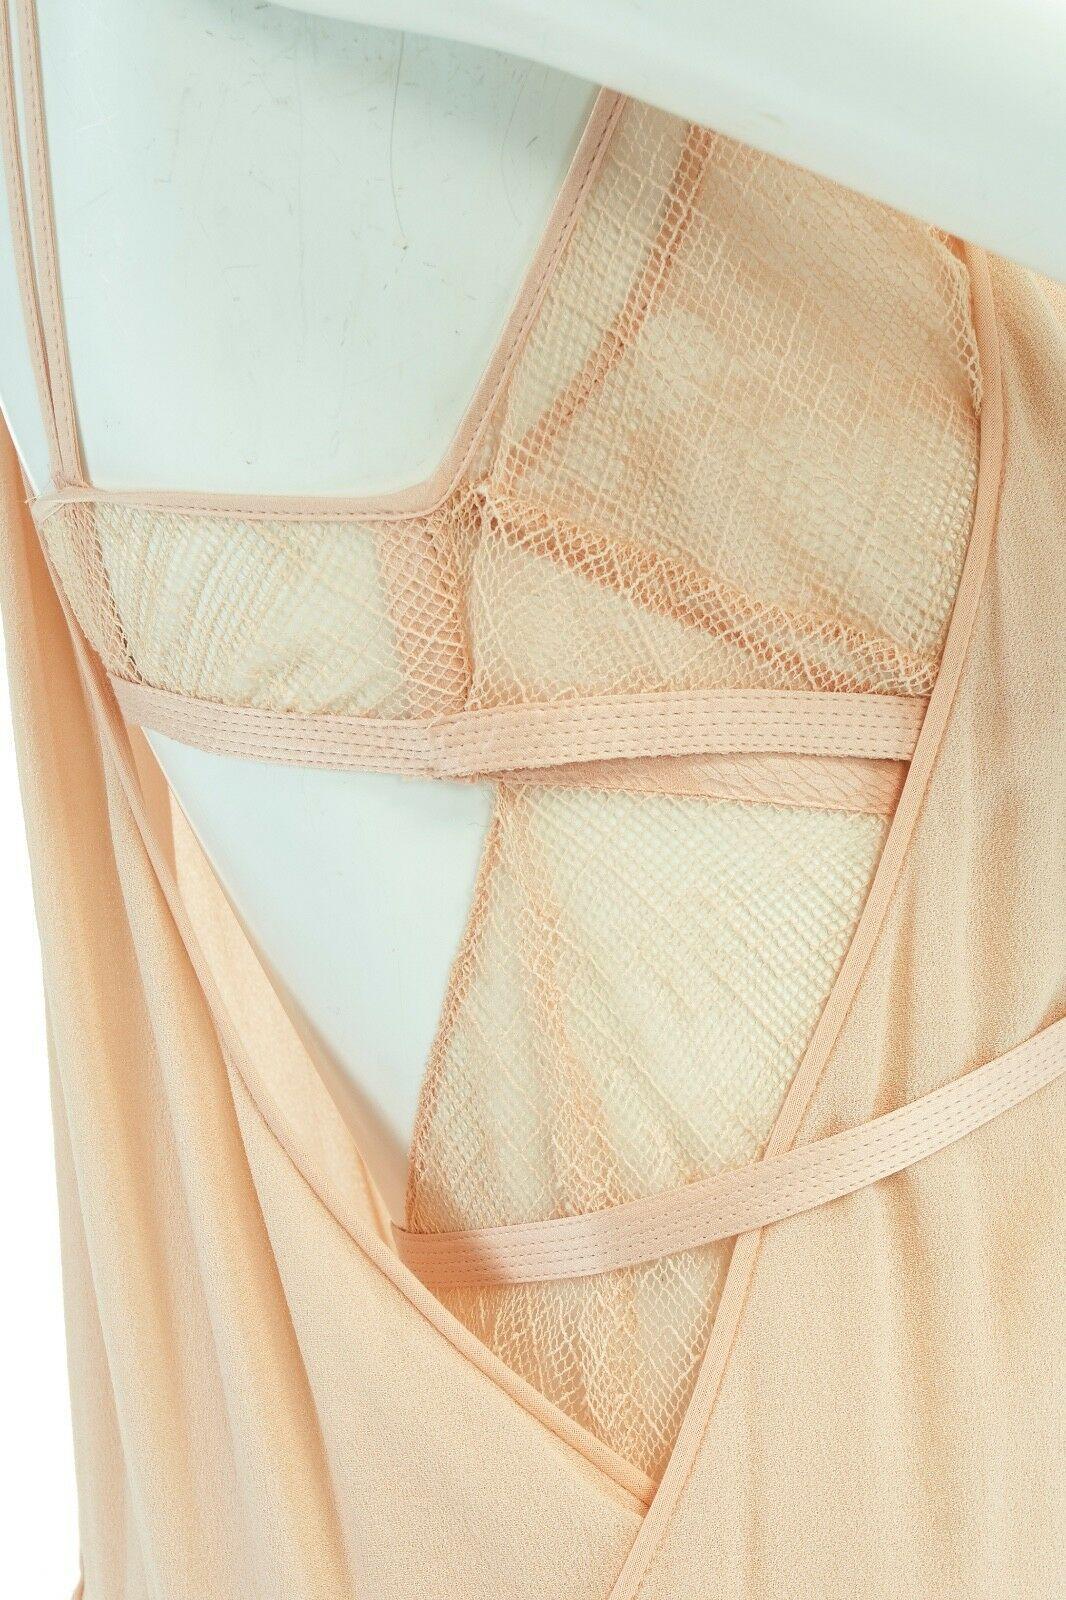 Women's runway CALVIN KLEIN nude lattice lace bondage camisole silk dress gown US4 S